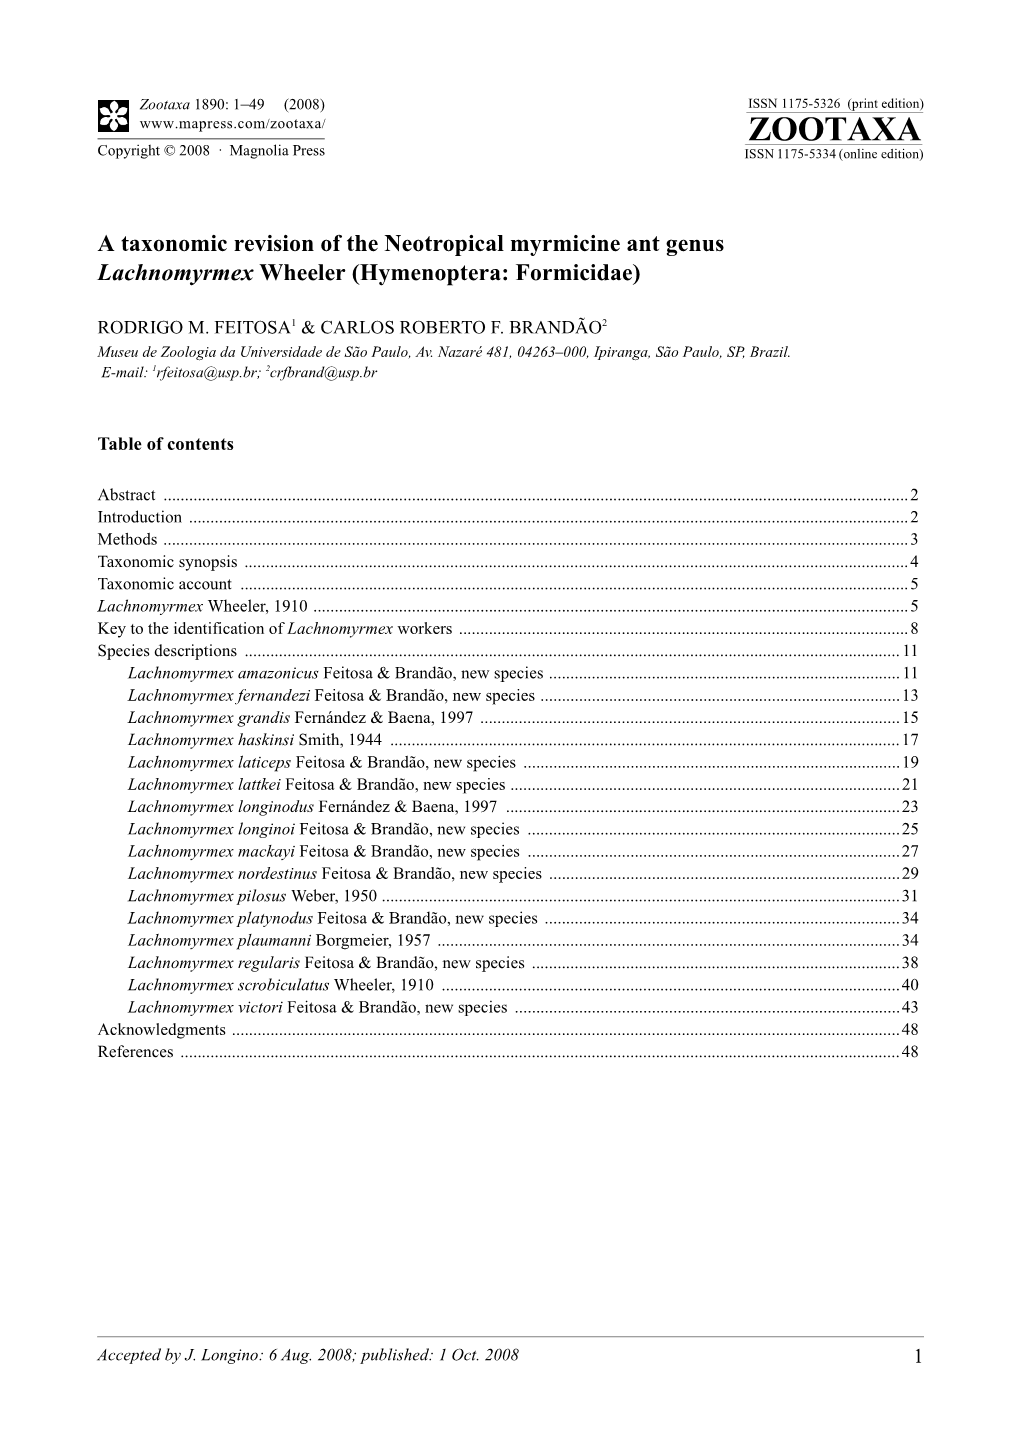 A Taxonomic Revision of the Neotropical Myrmicine Ant Genus Lachnomyrmex Wheeler (Hymenoptera: Formicidae)